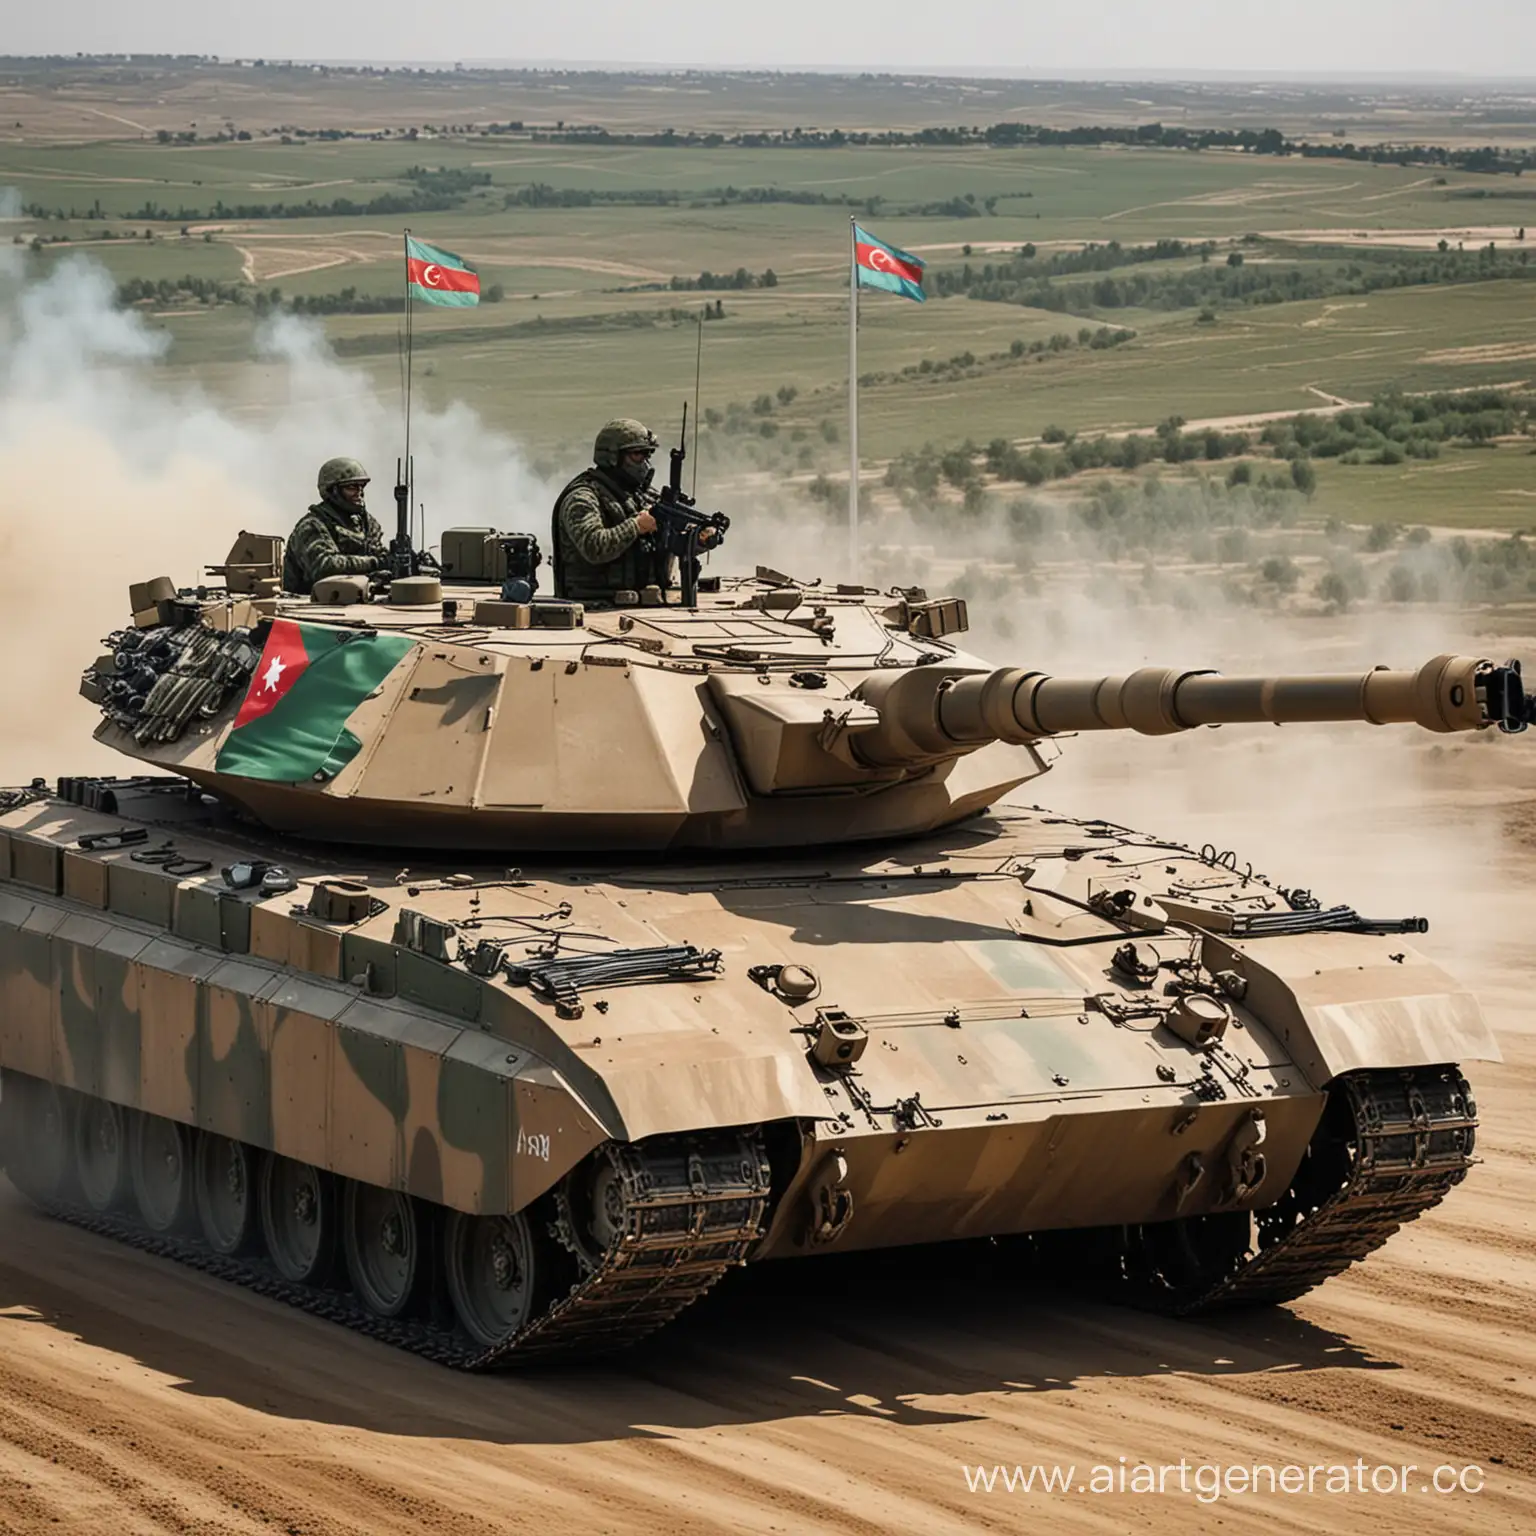 Azerbaijans-StateoftheArt-Tank-Displaying-Lethal-Arsenal